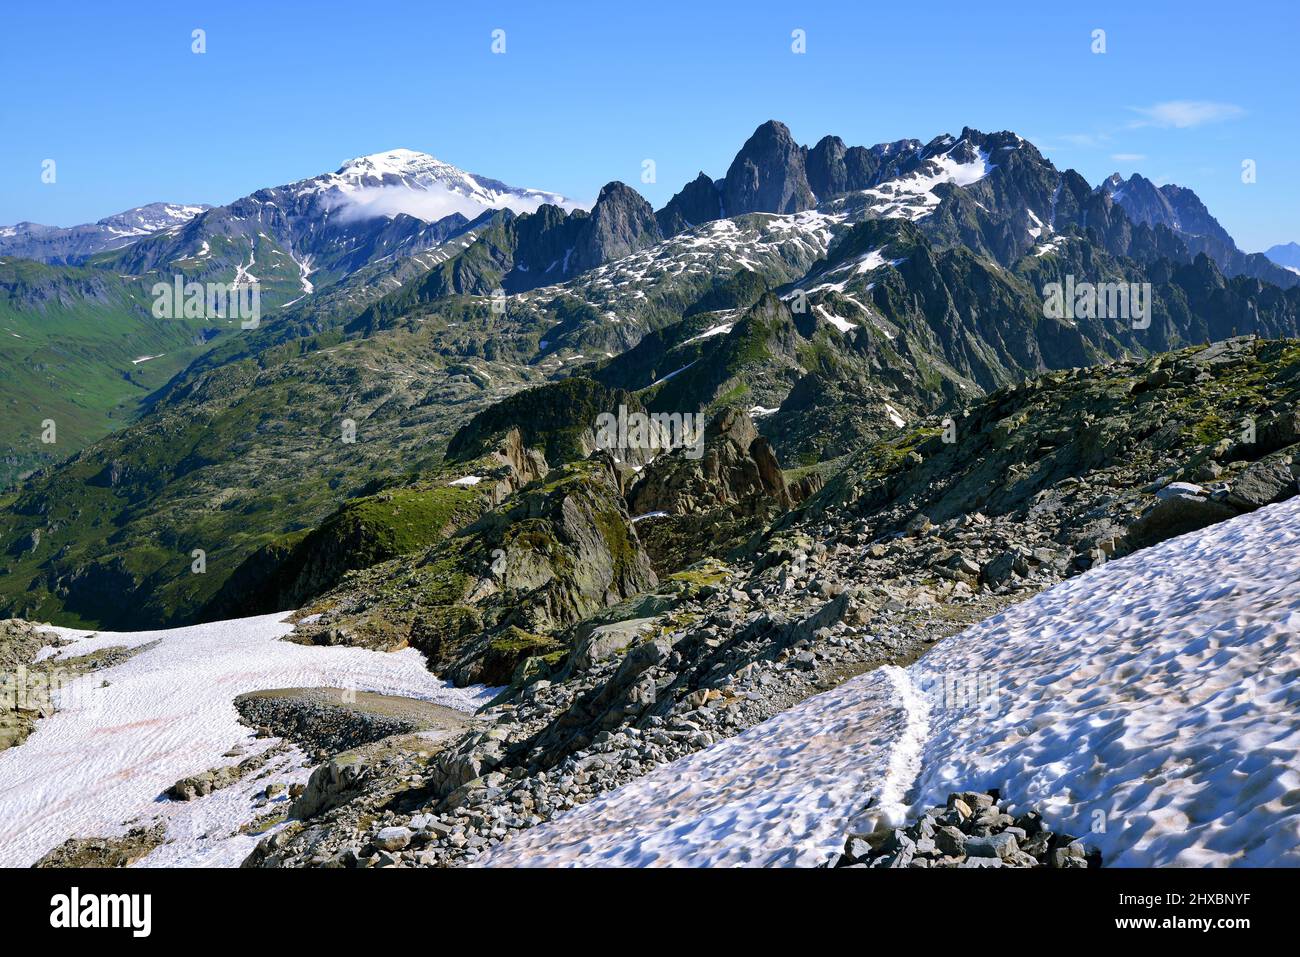 Vista desde la cima de la montaña Le Brevent. Alpes franceses, Chamonix, Francia. Foto de stock